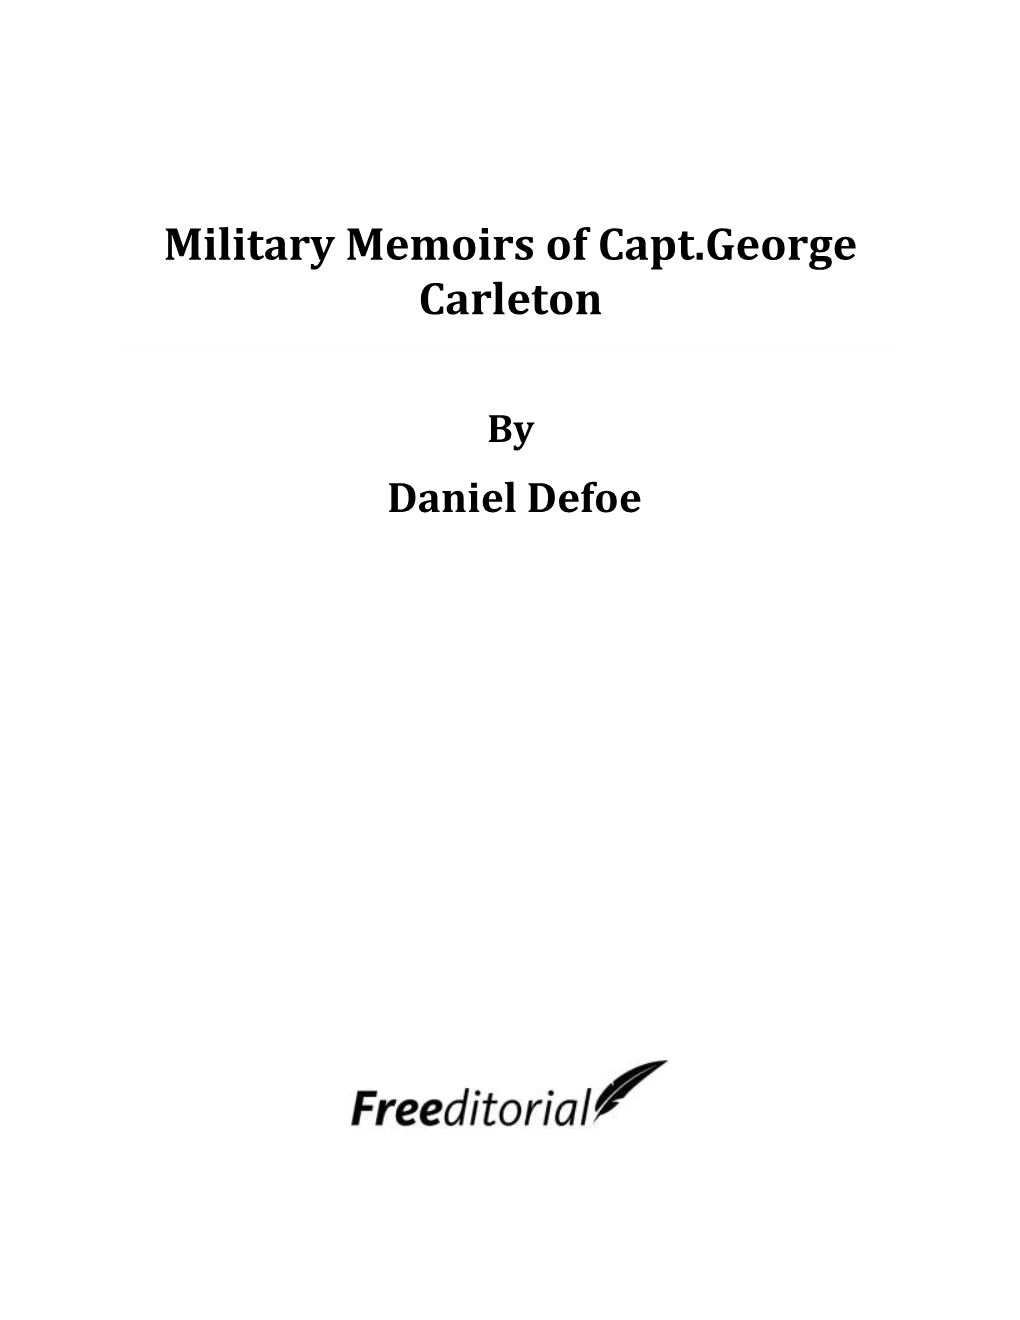 Military Memoirs of Capt.George Carleton